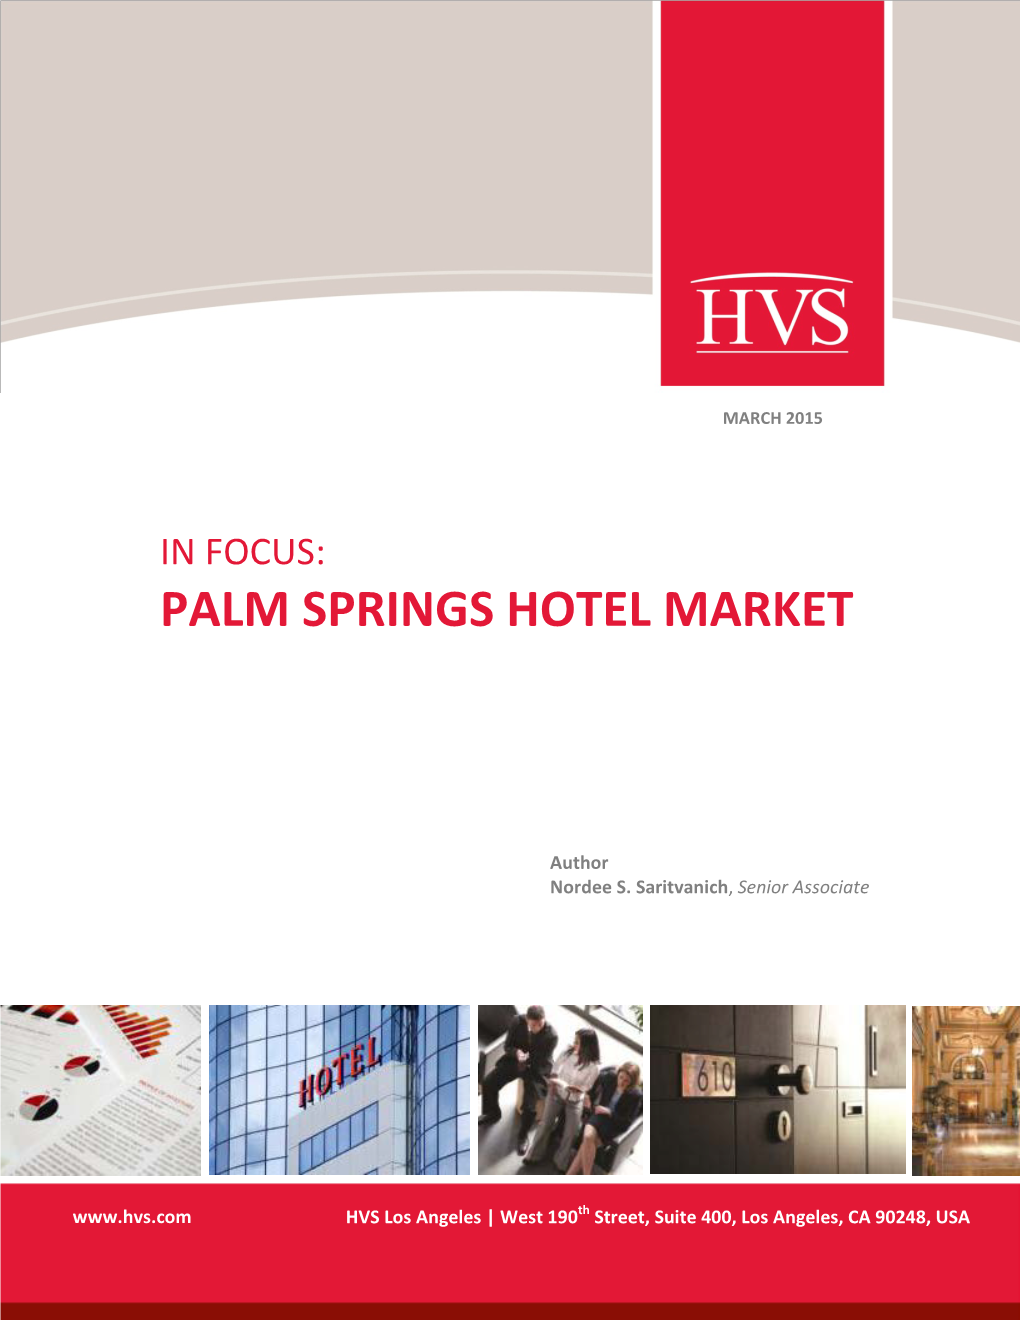 Palm Springs Hotel Market